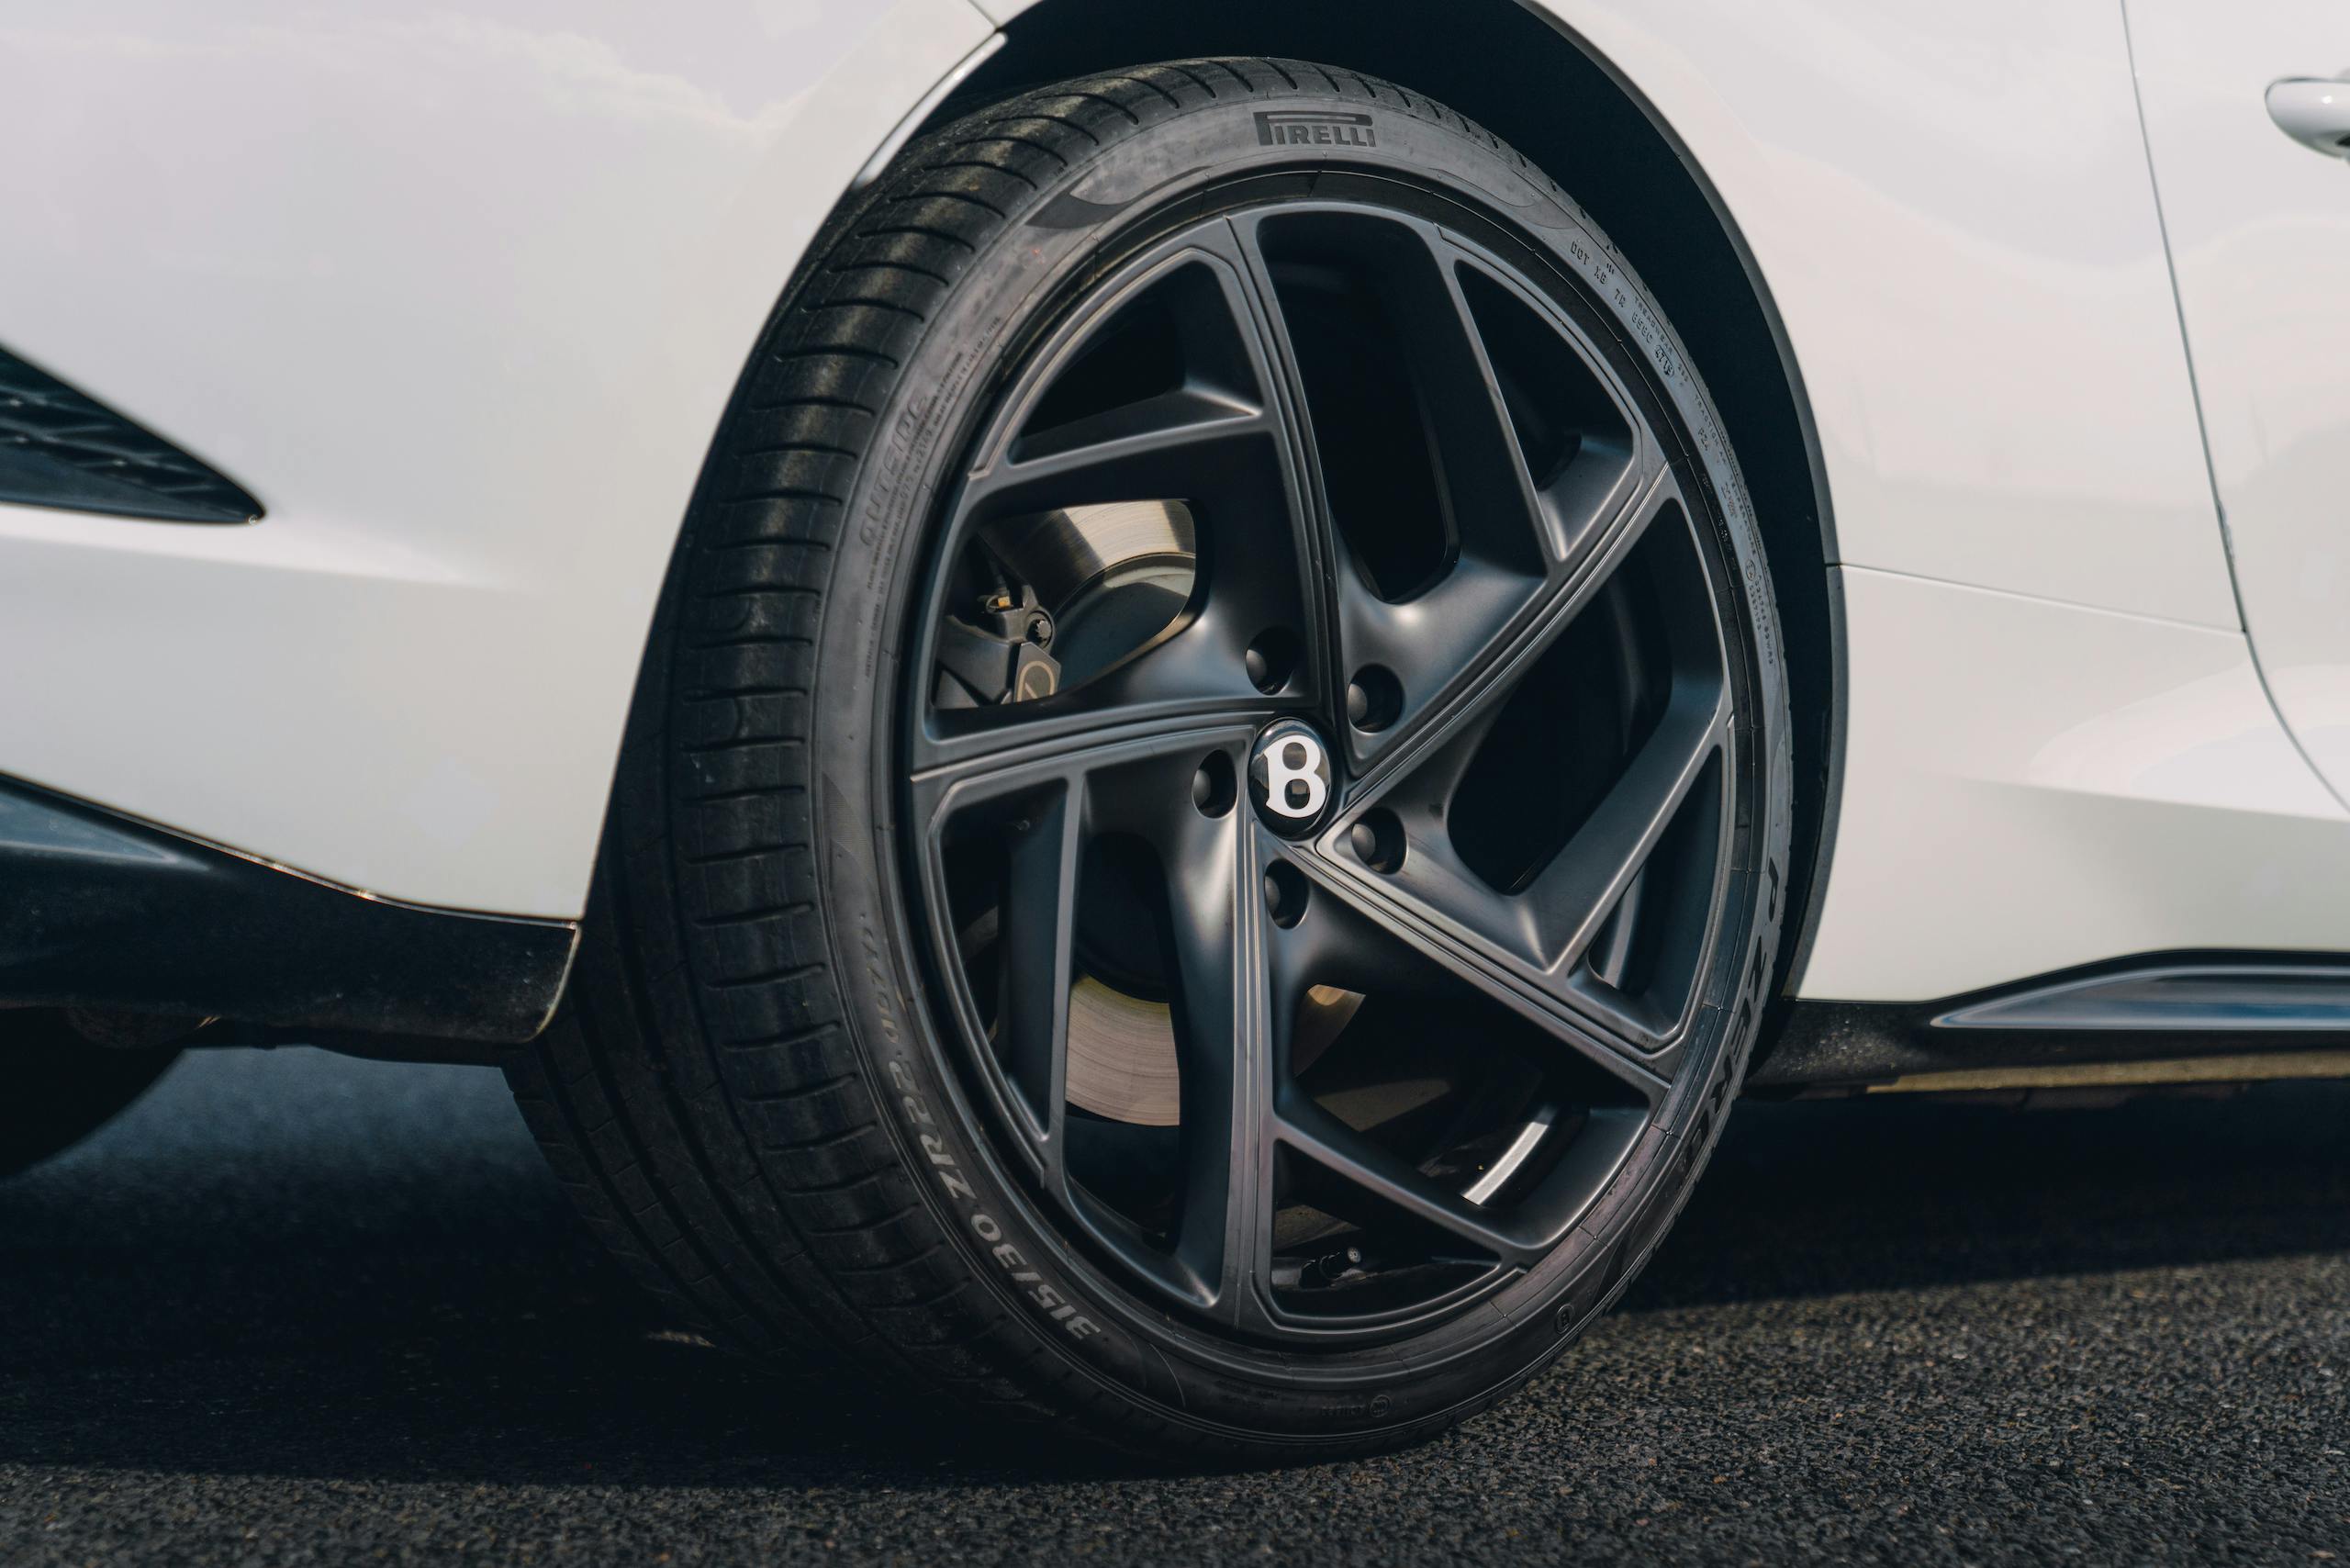 2021 Bentley Bacalar rear wheel detail